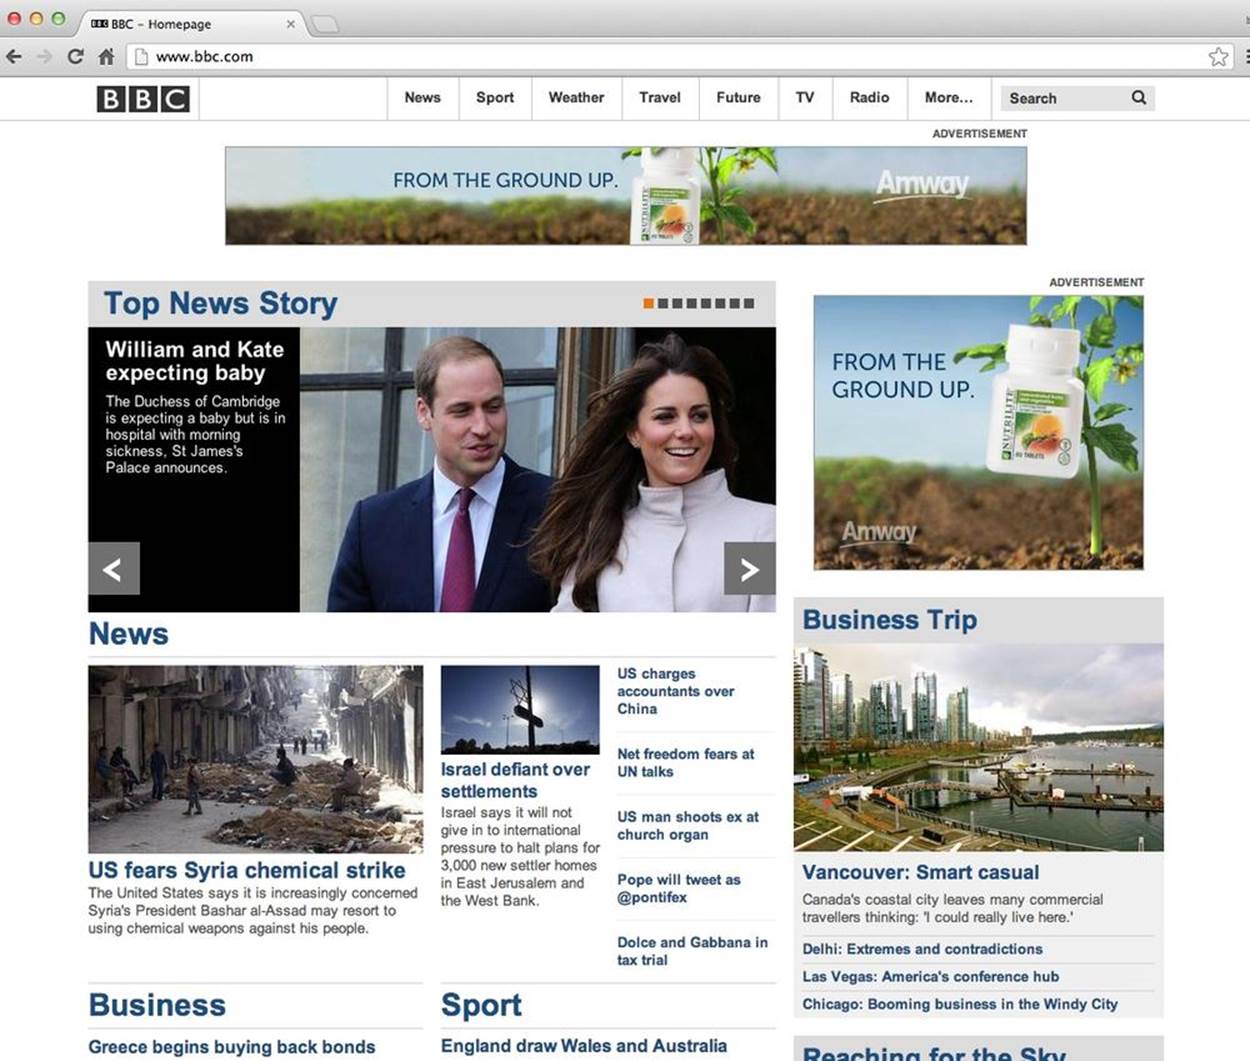 The desktop version of bbc.com